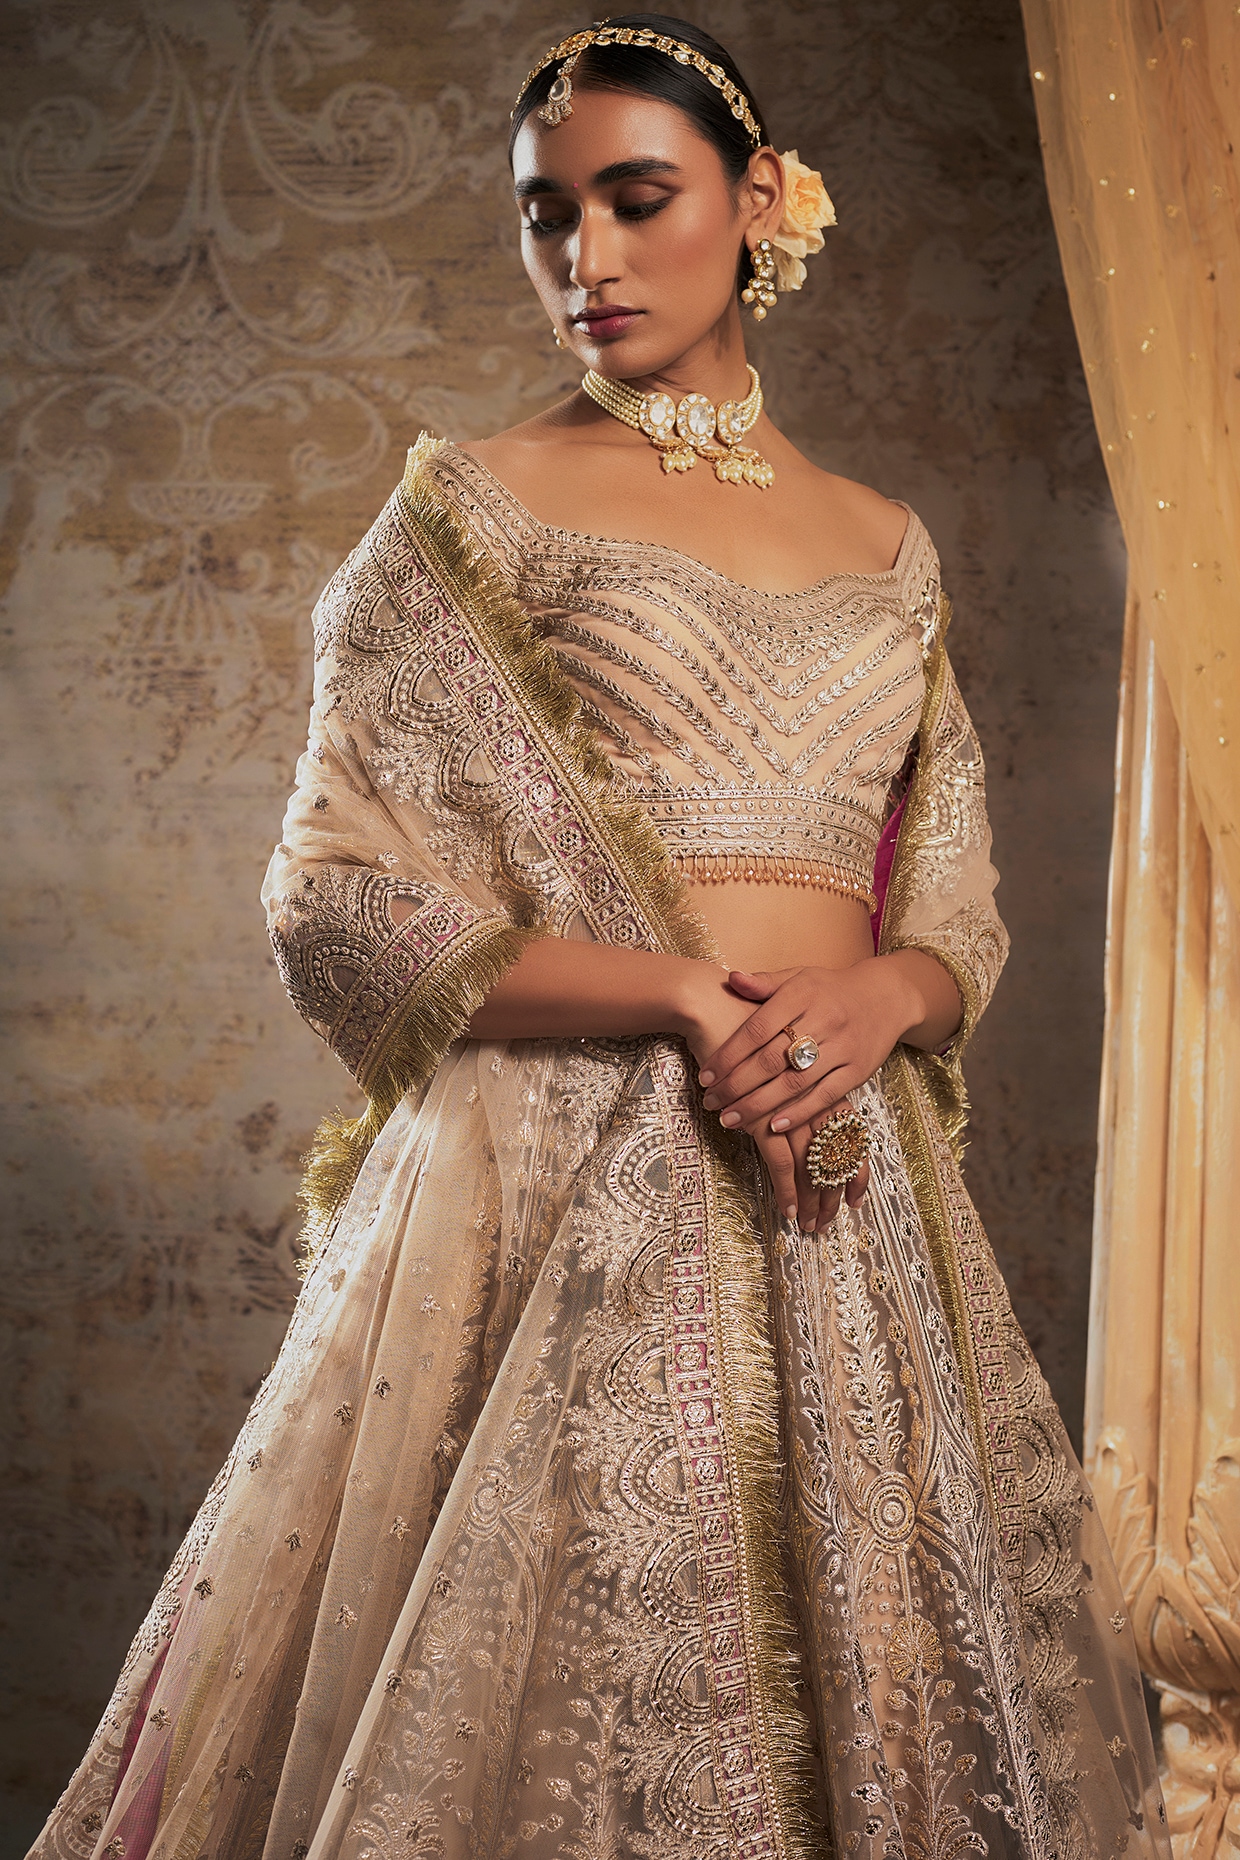 Sanya Malhotra's ivory and gold saree by Falguni & Shane peacock is  refreshing choice for wedding season : Bollywood News - Bollywood Hungama